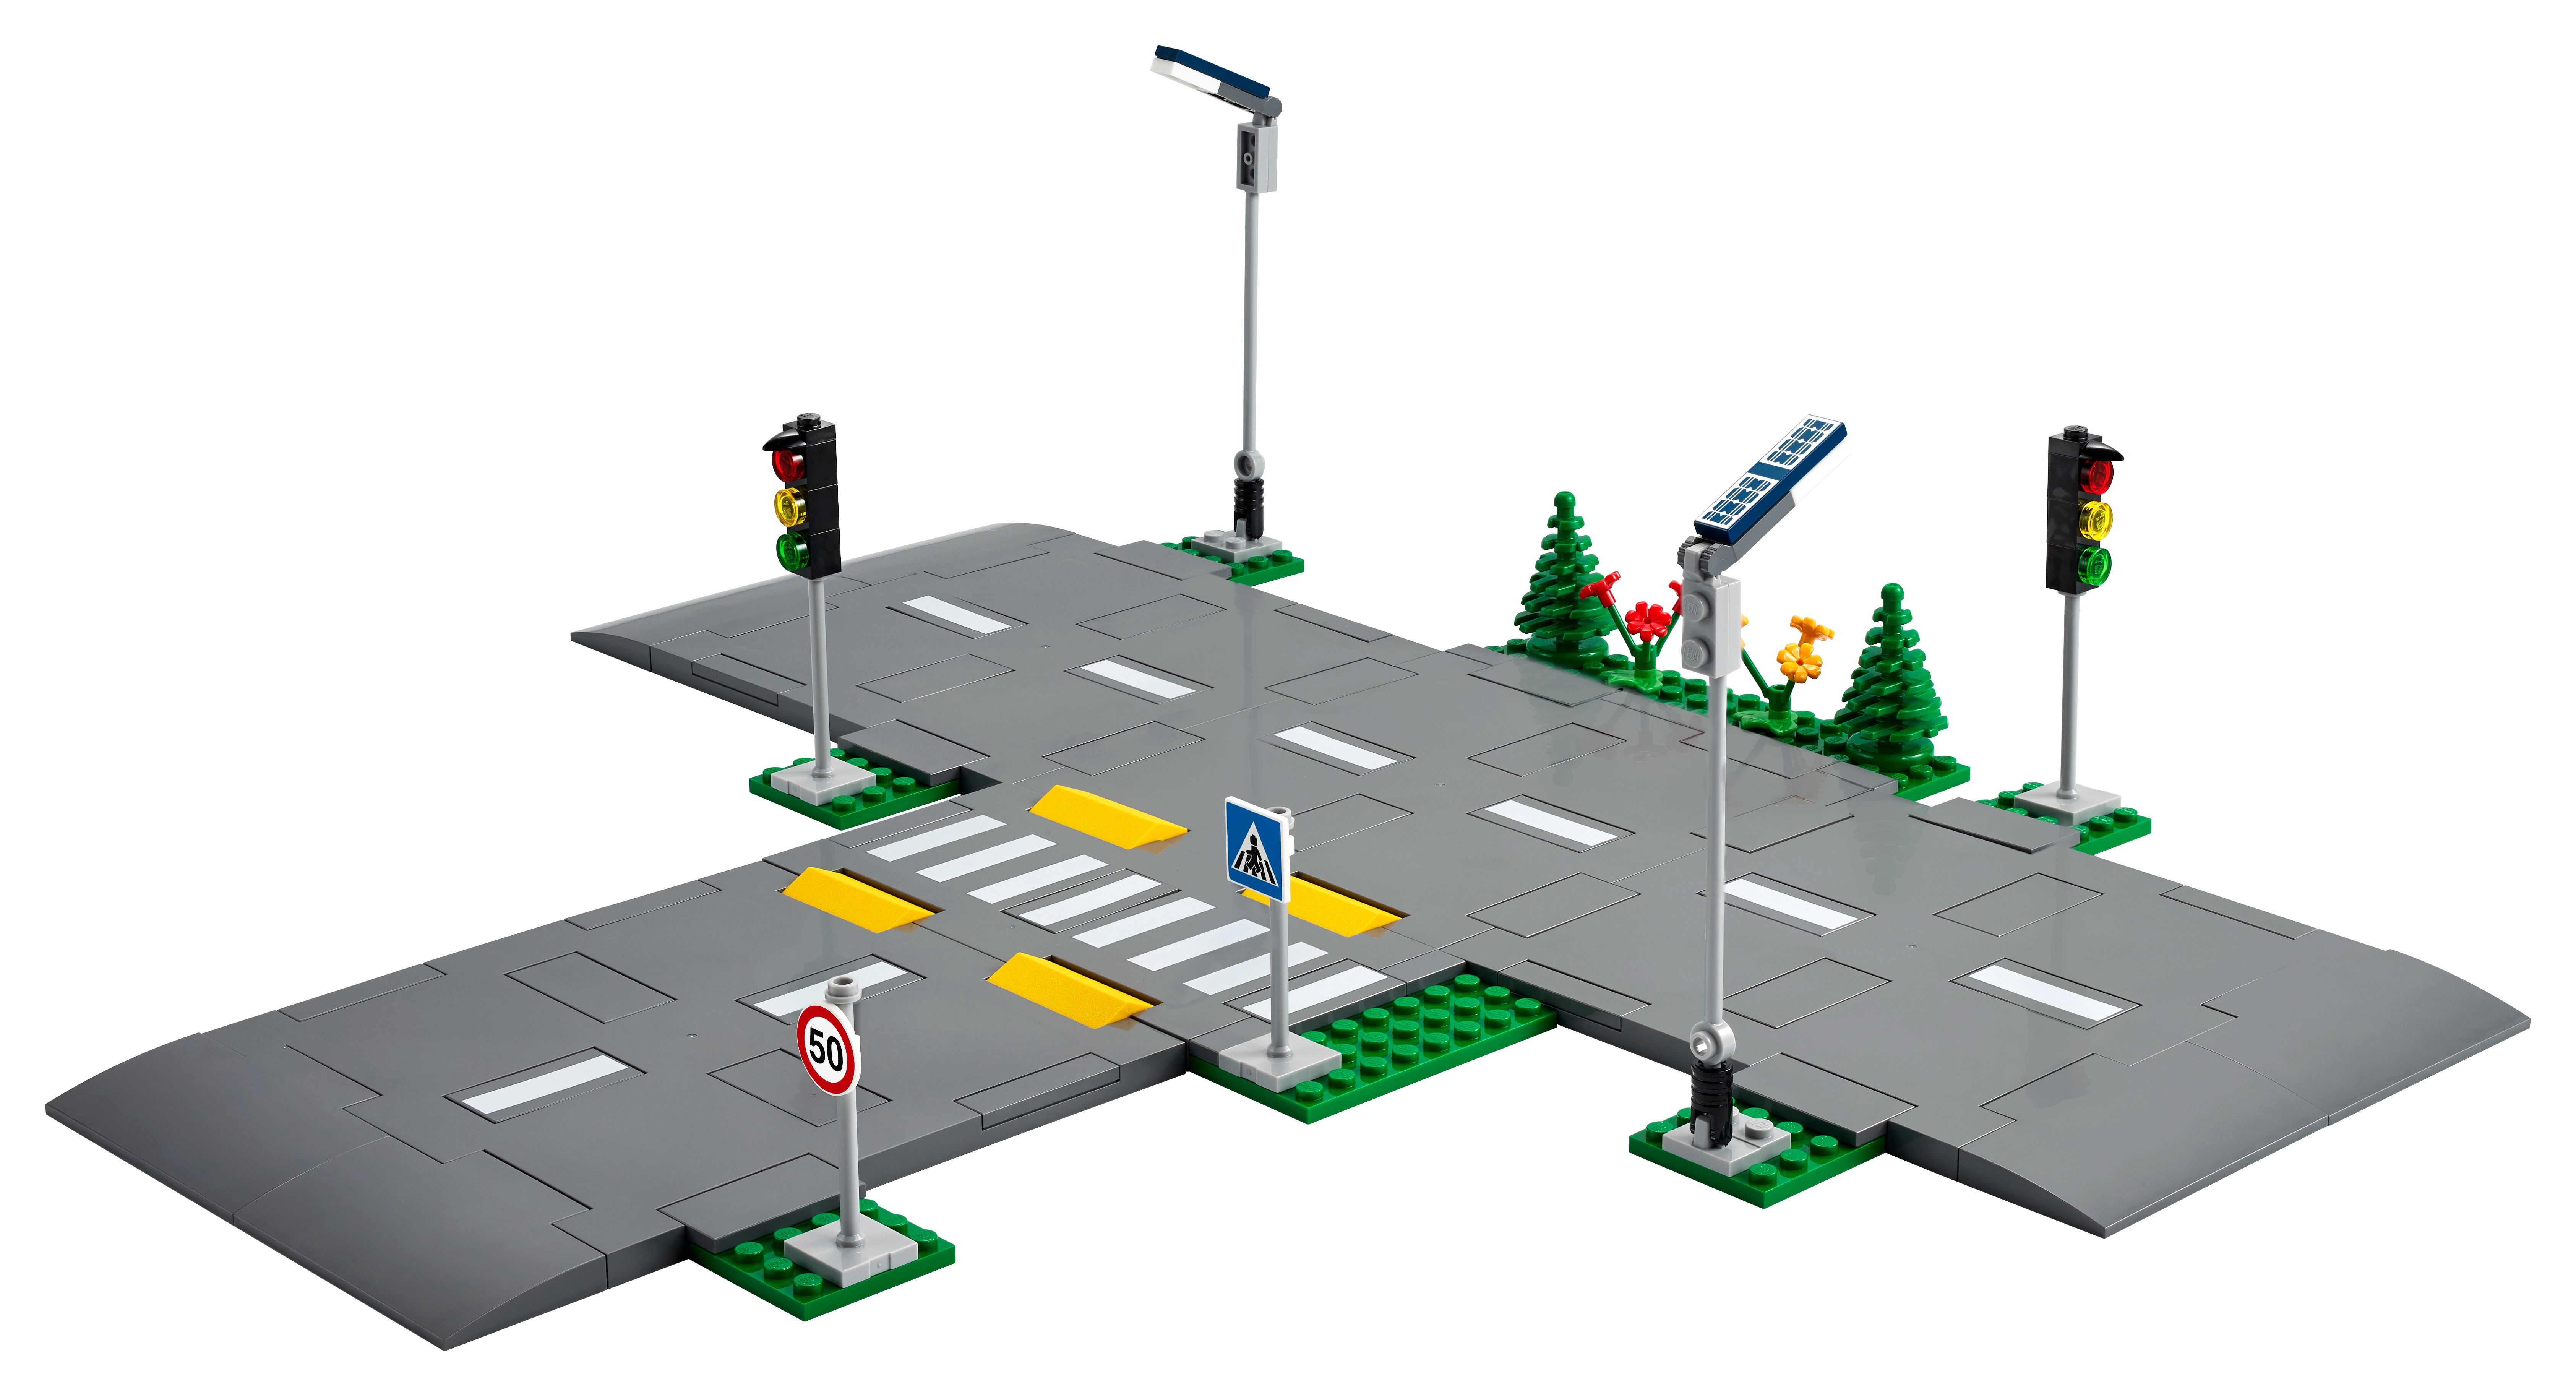 LEGO 60304 Road Plates Instructions, City